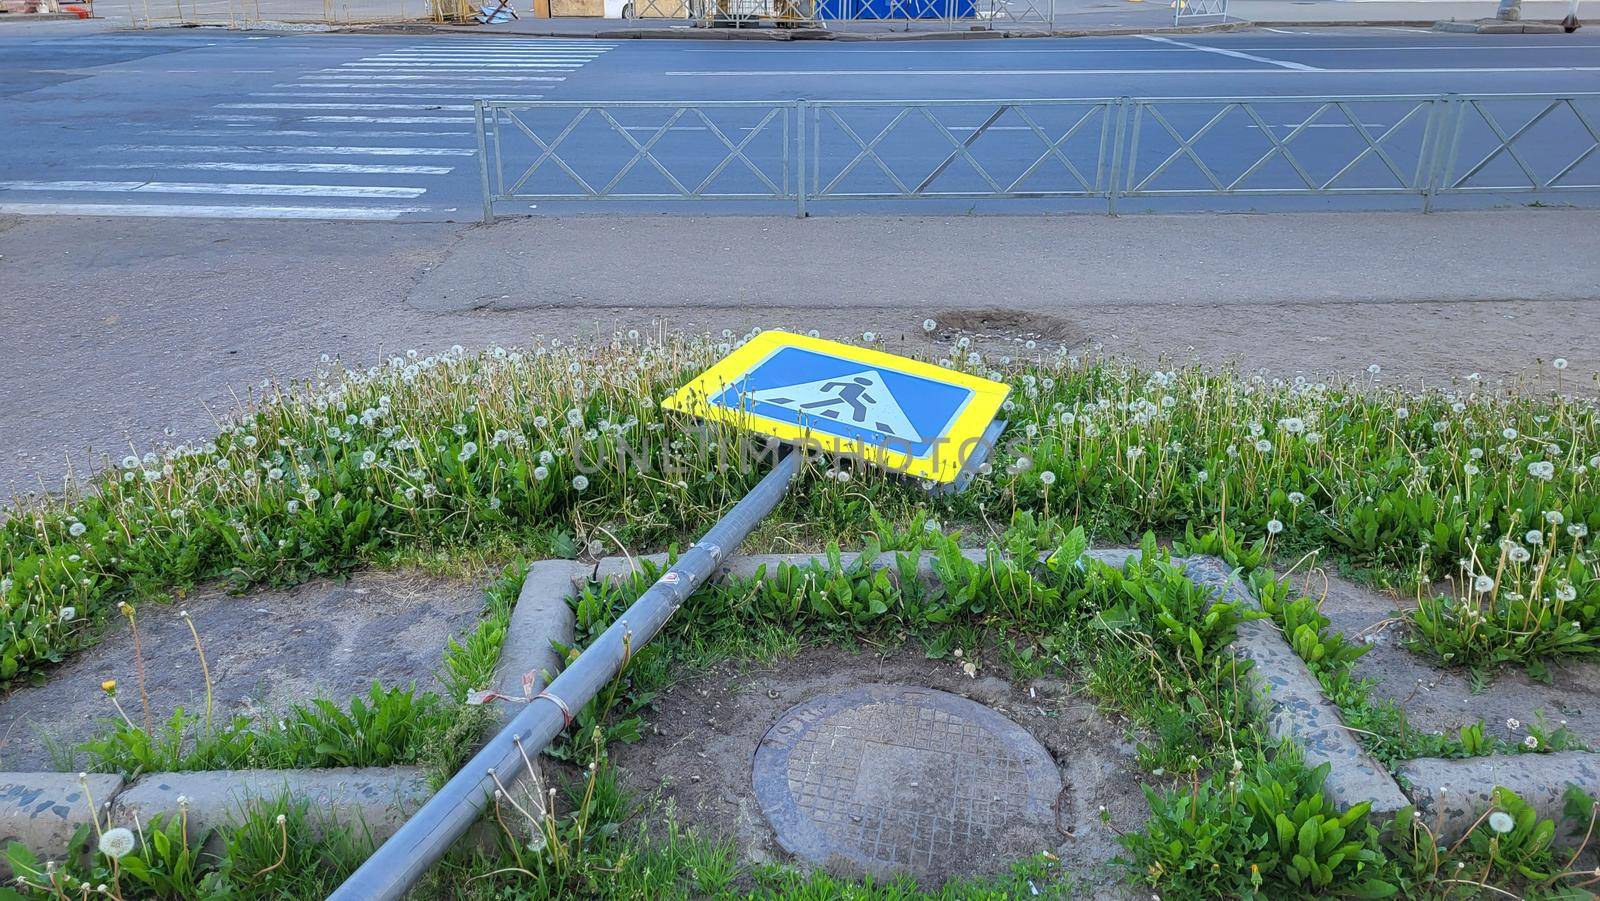 Repair installation of a road sign pedestrian crossing by lapushka62